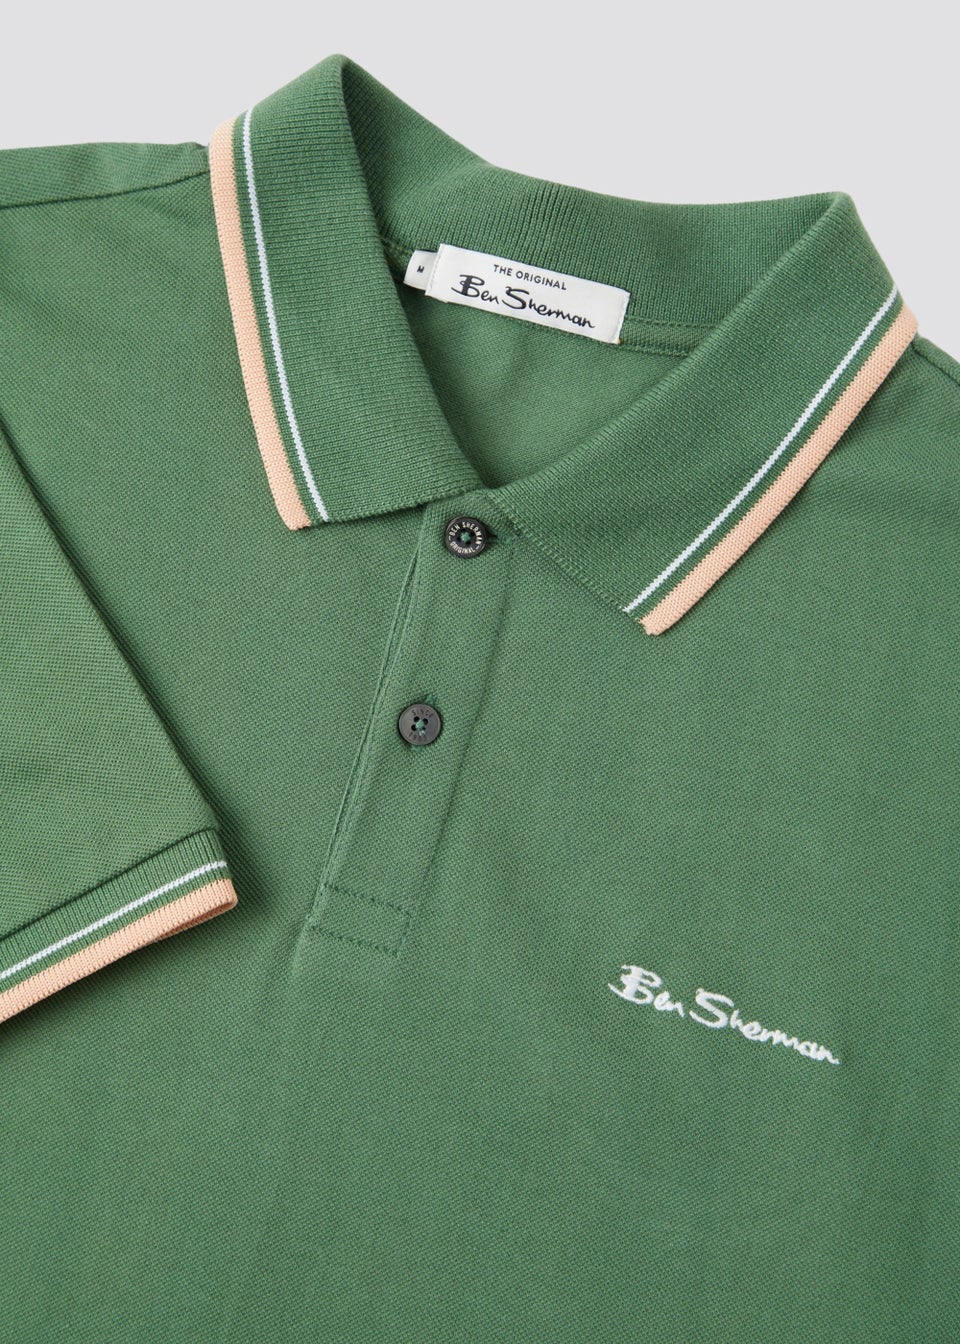 Ben Sherman Green Tipped Polo Shirt - Matalan